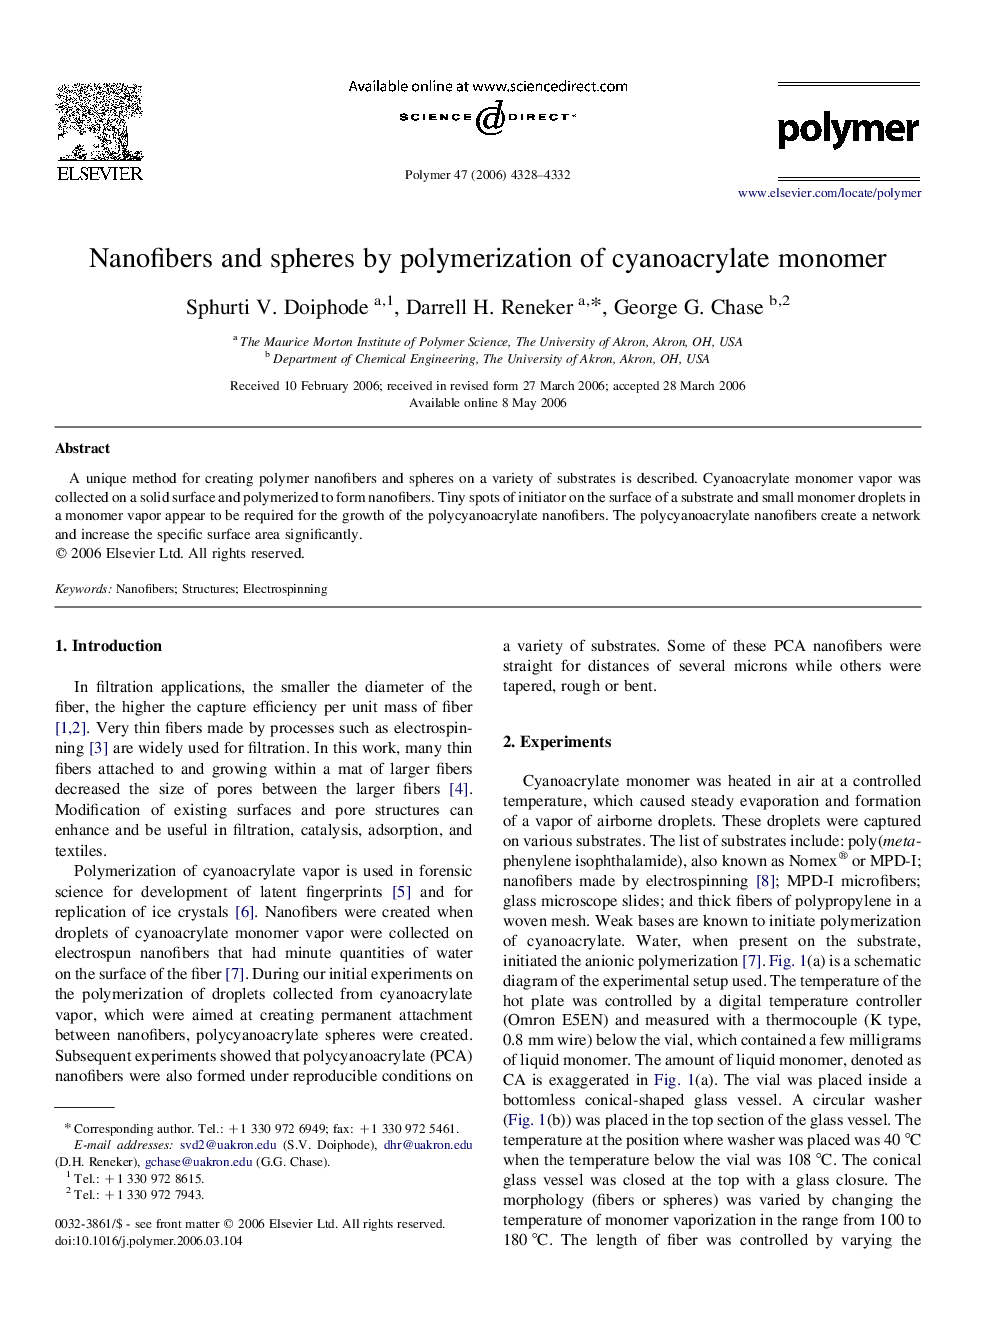 Nanofibers and spheres by polymerization of cyanoacrylate monomer